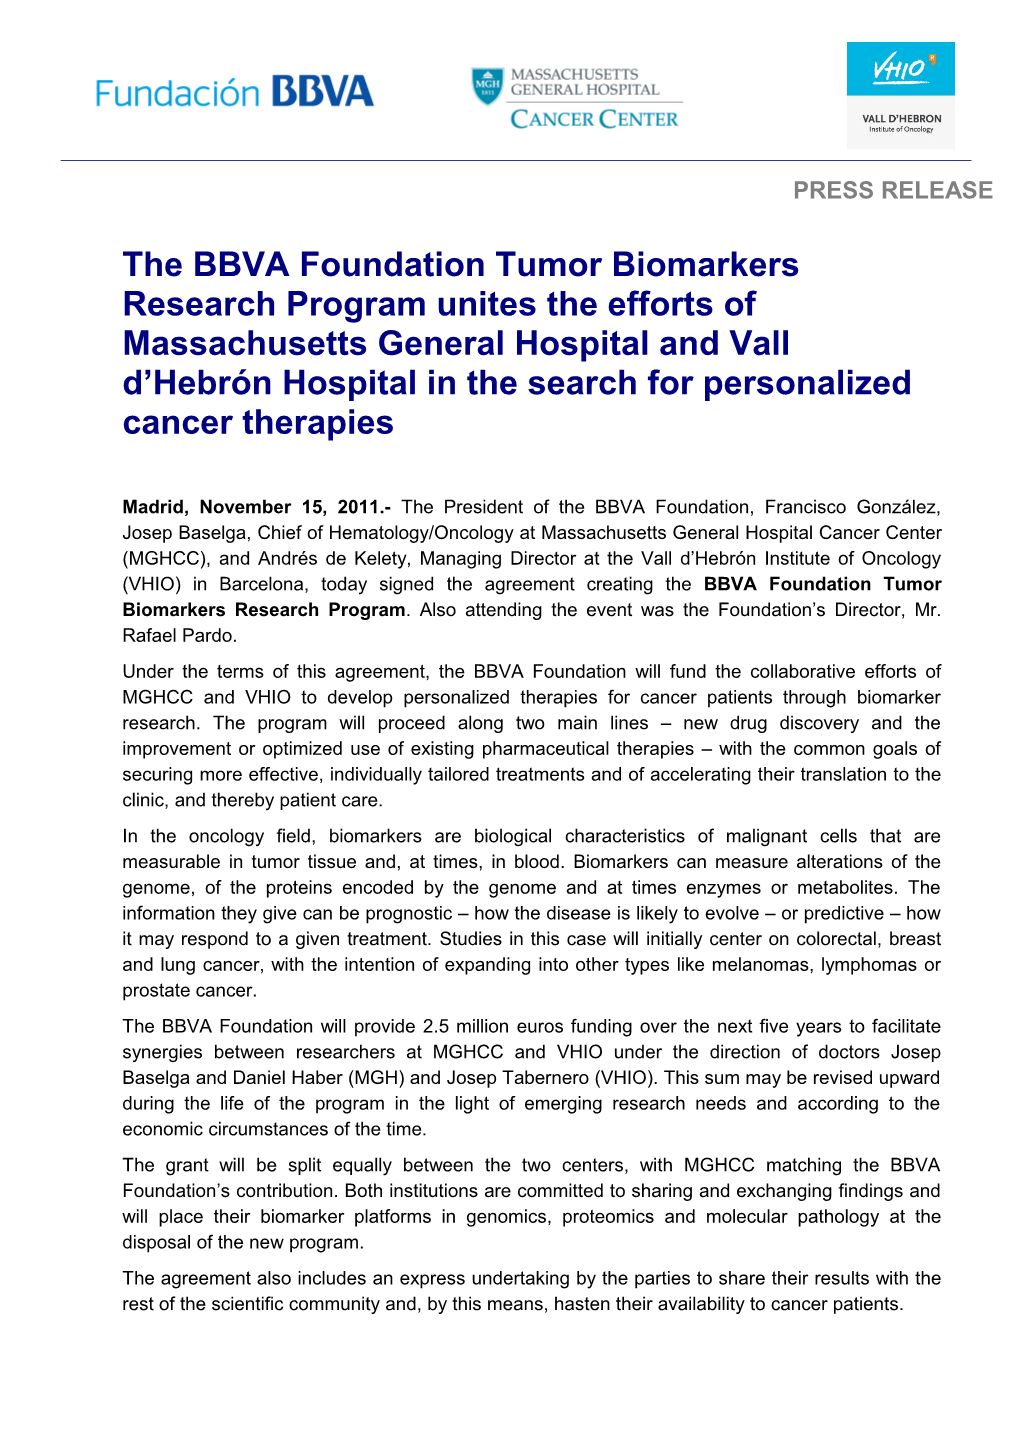 The BBVA Foundation Tumor Biomarkers Research Program Unites the Efforts of Massachusetts